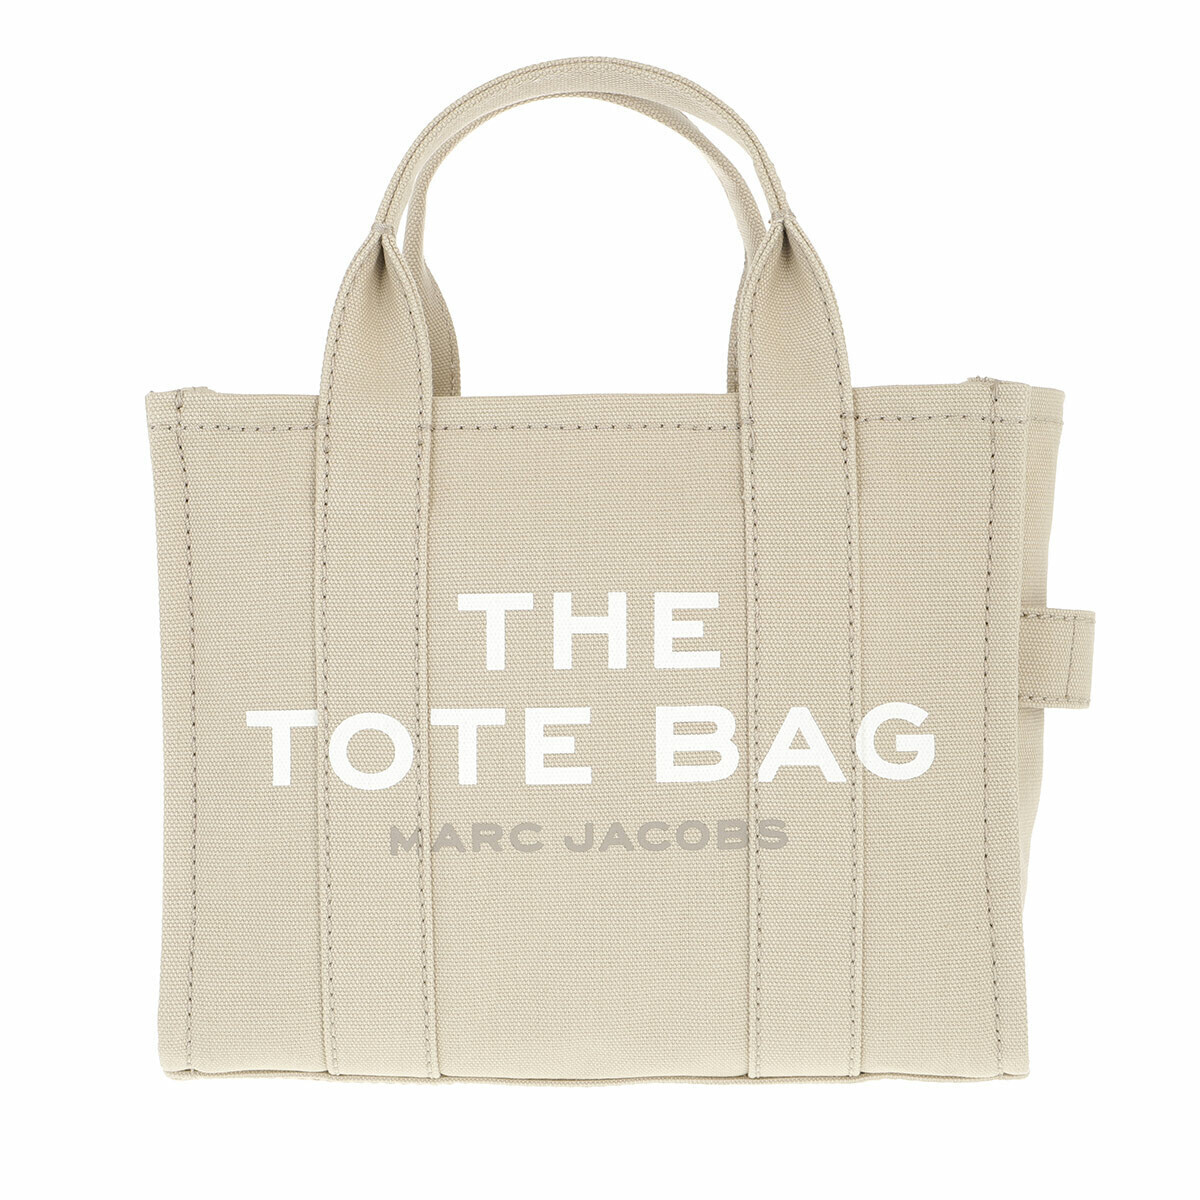 The Tote Bag - Beige